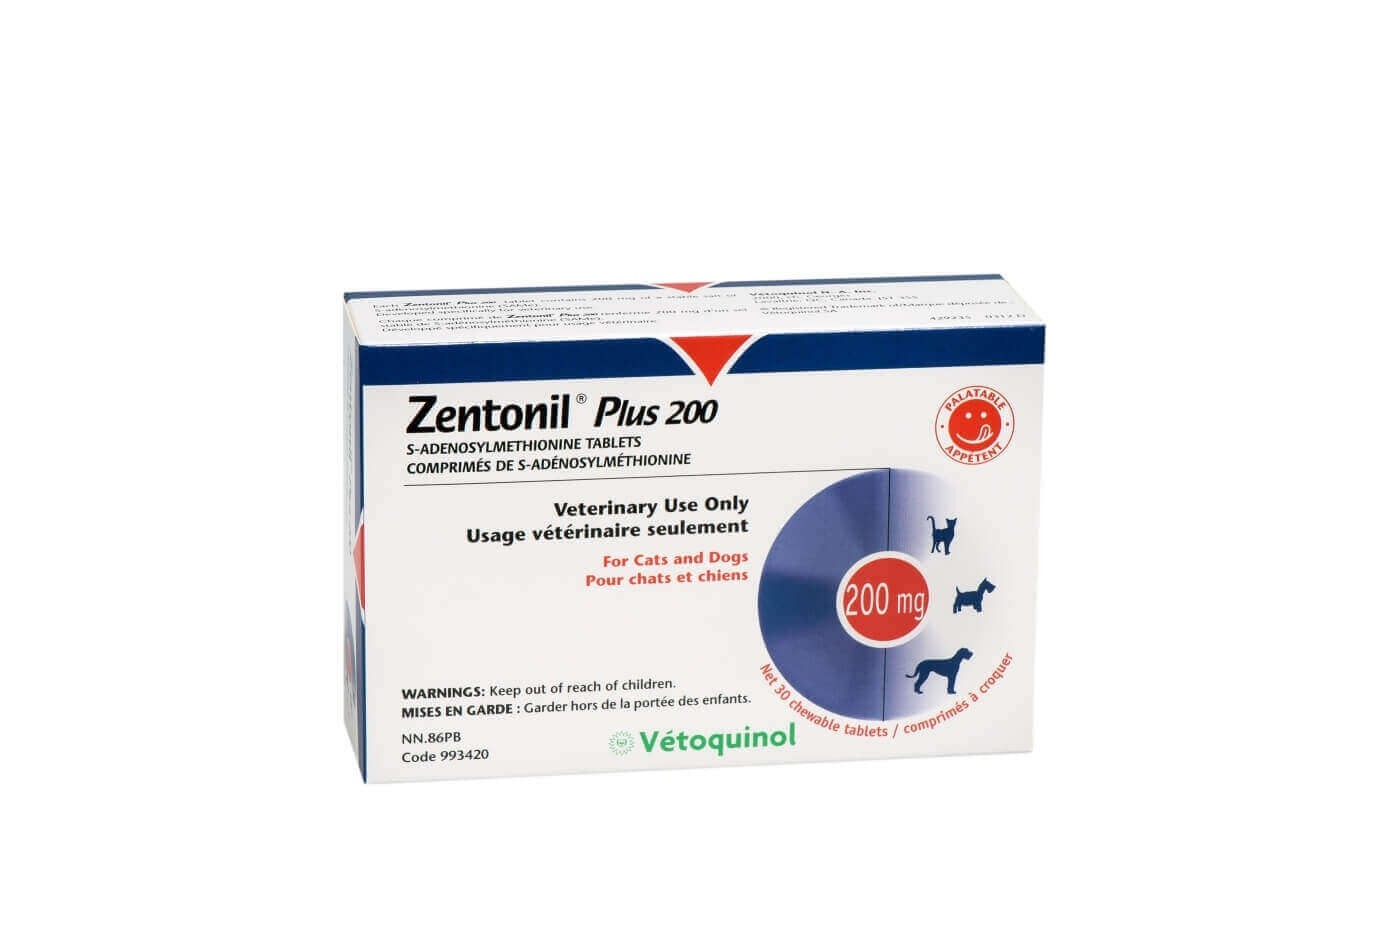 Vetoquinol Zentonil Plus pour chien et chat